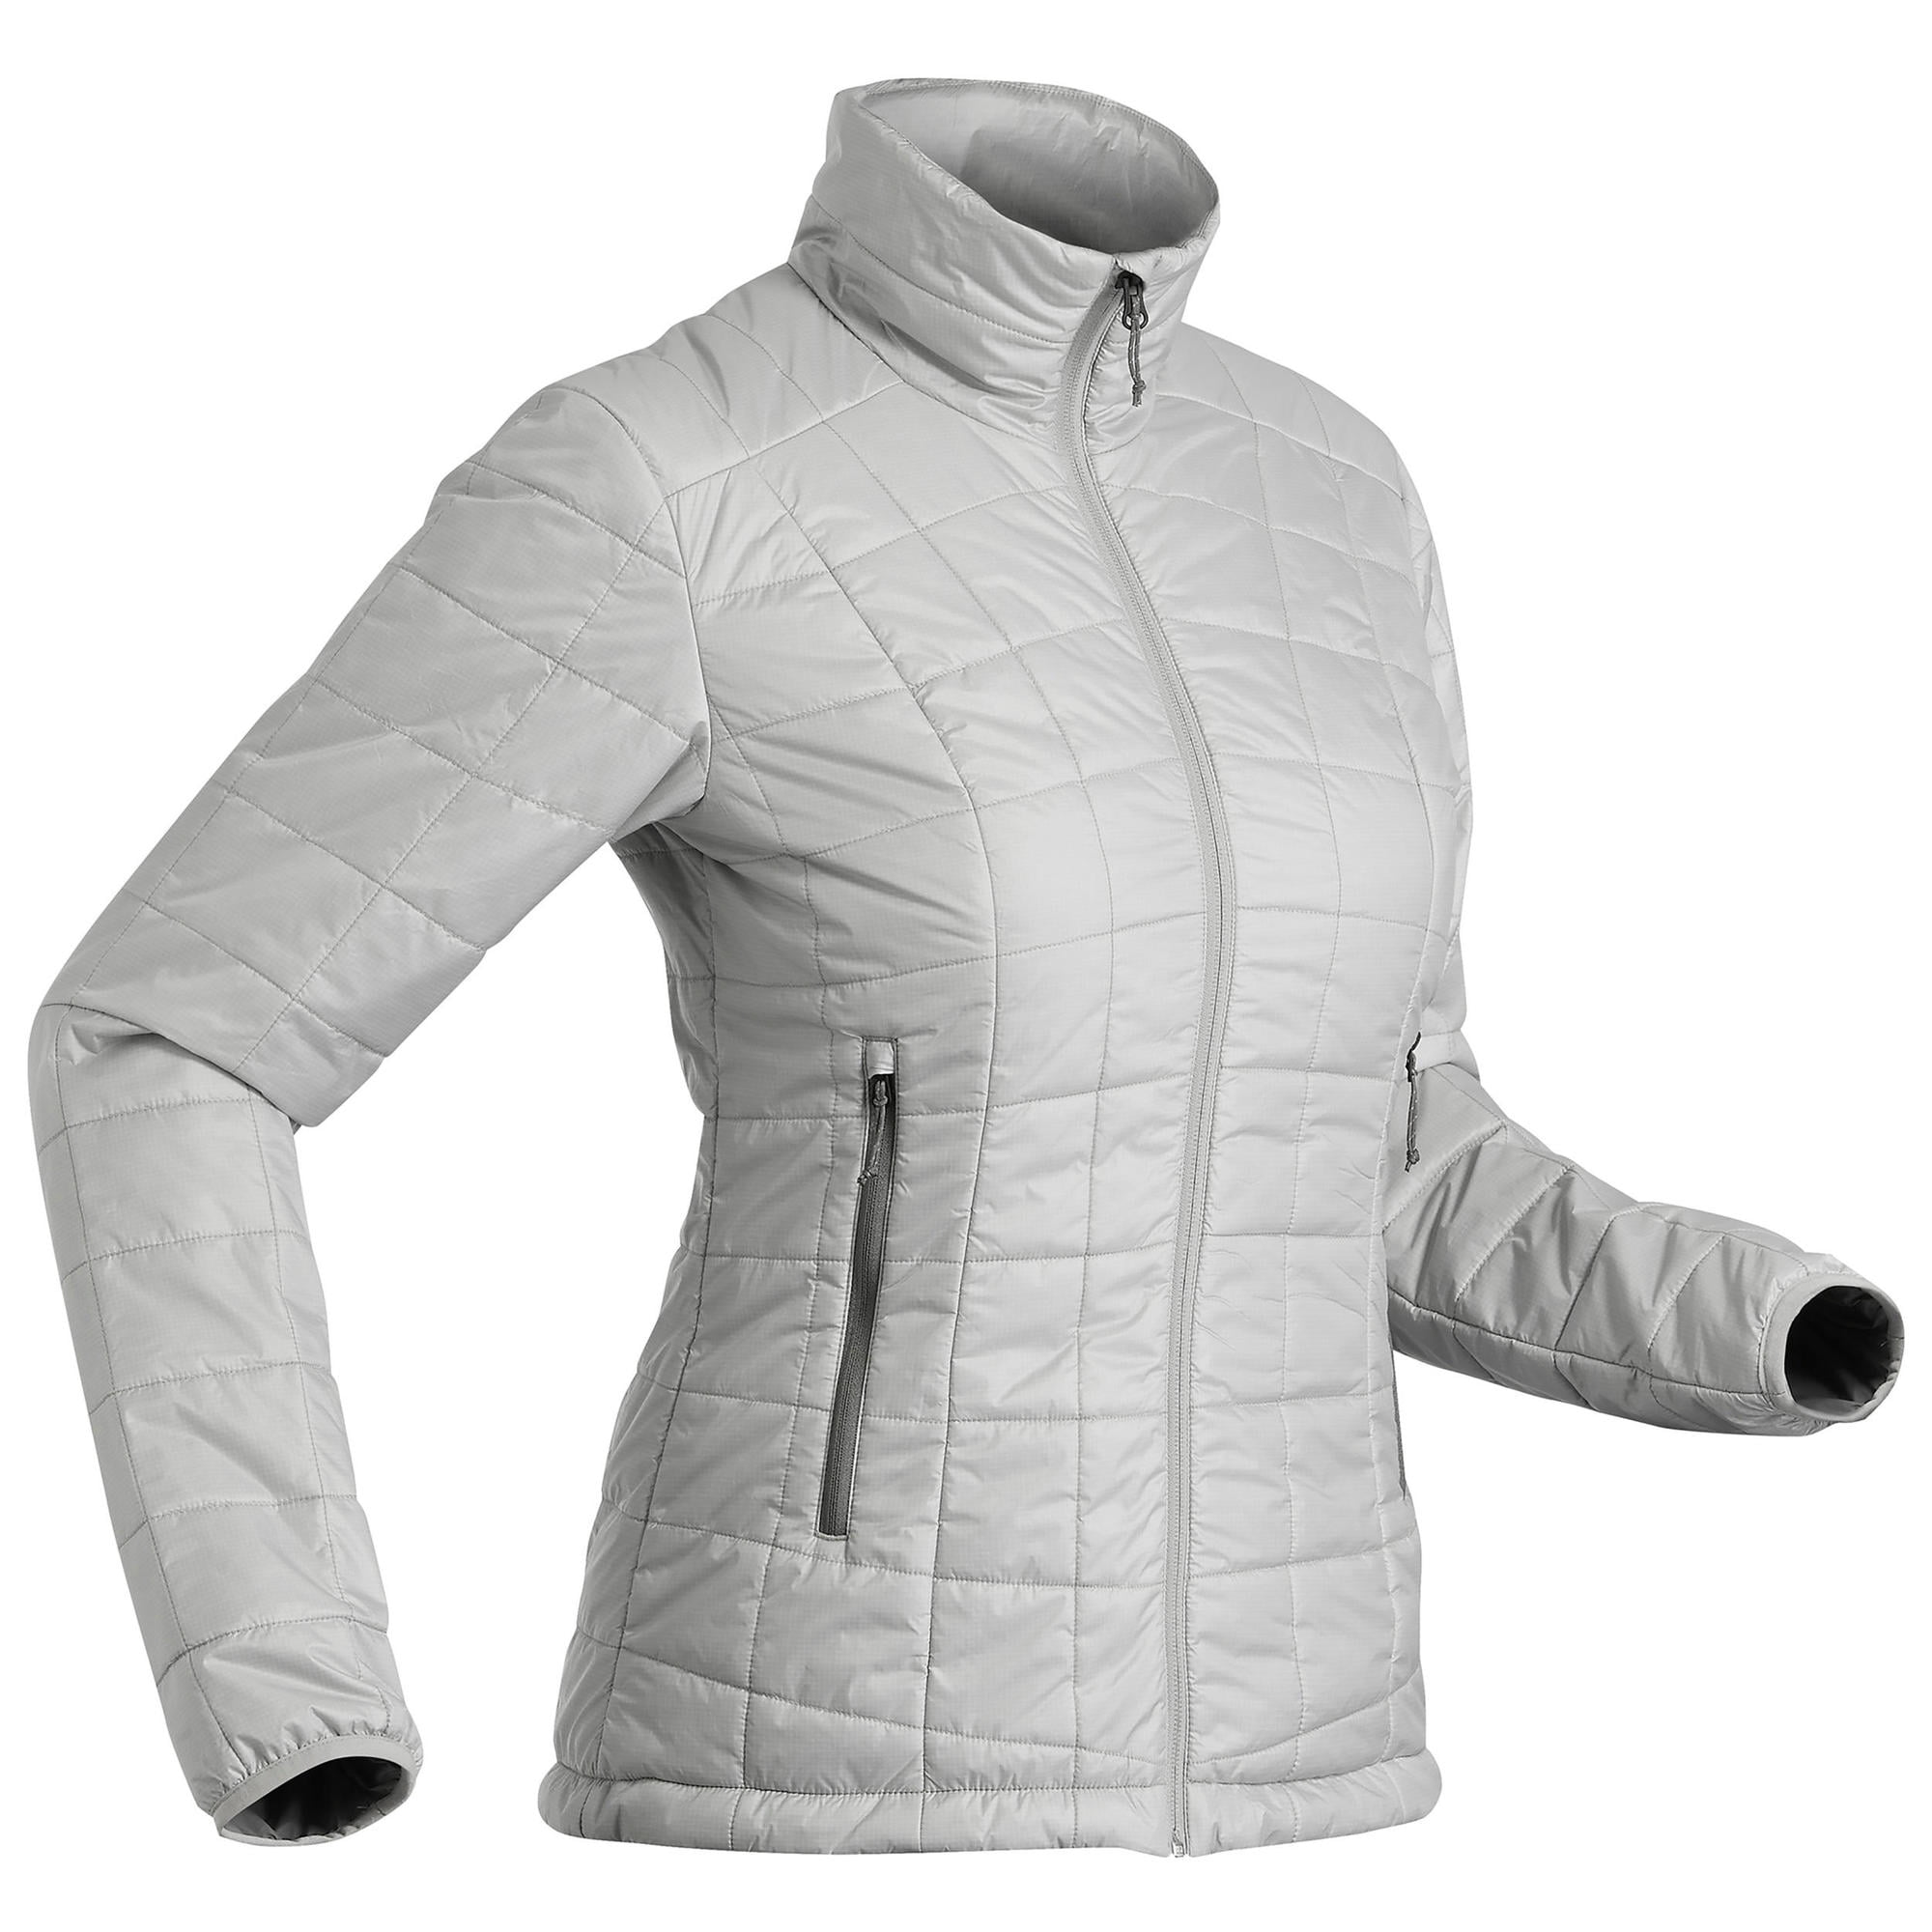 thermal jacket decathlon